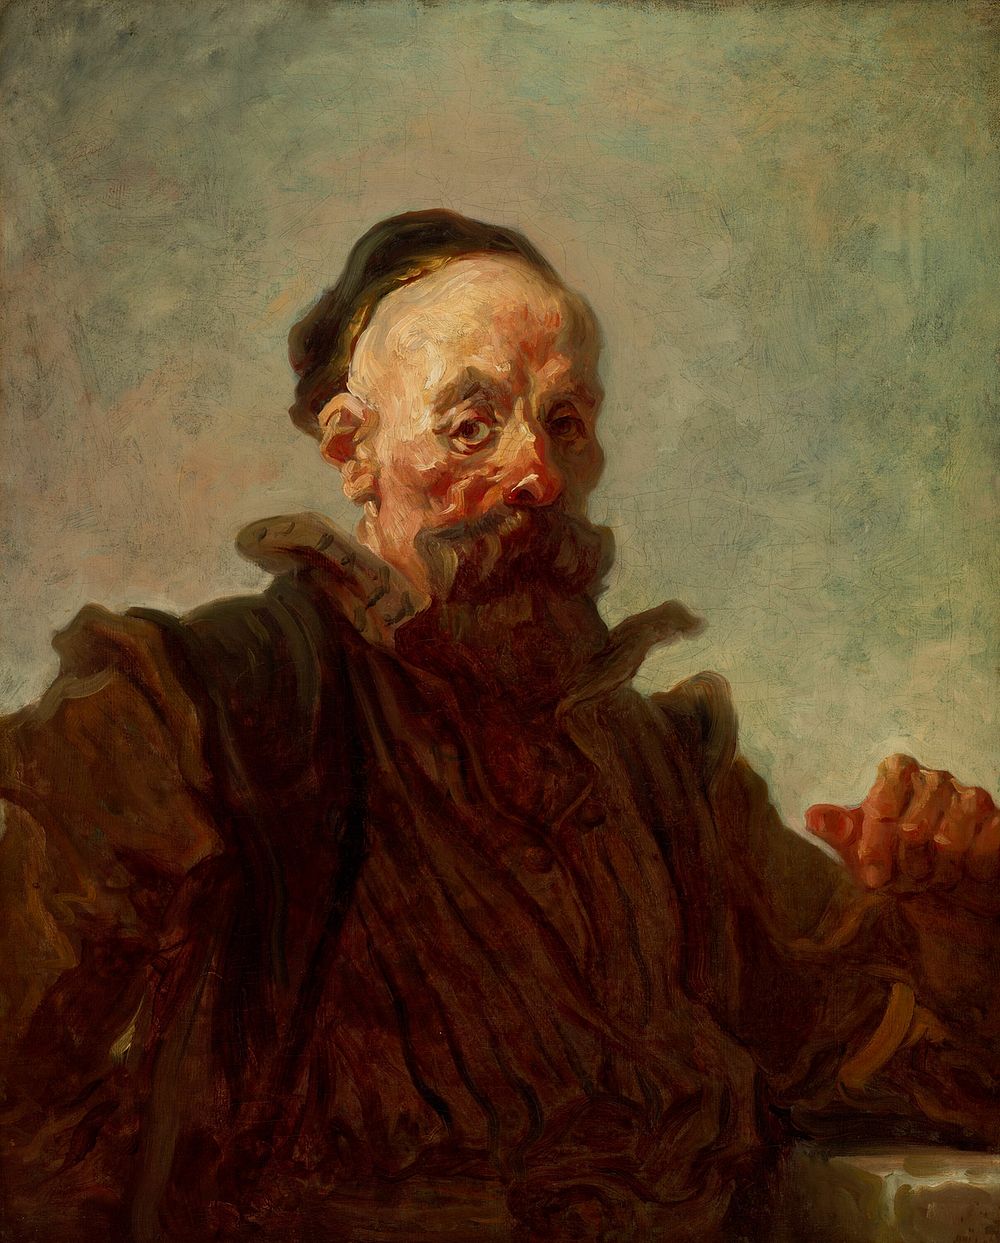 Portrait of a Man in Costume by Jean Honoré Fragonard